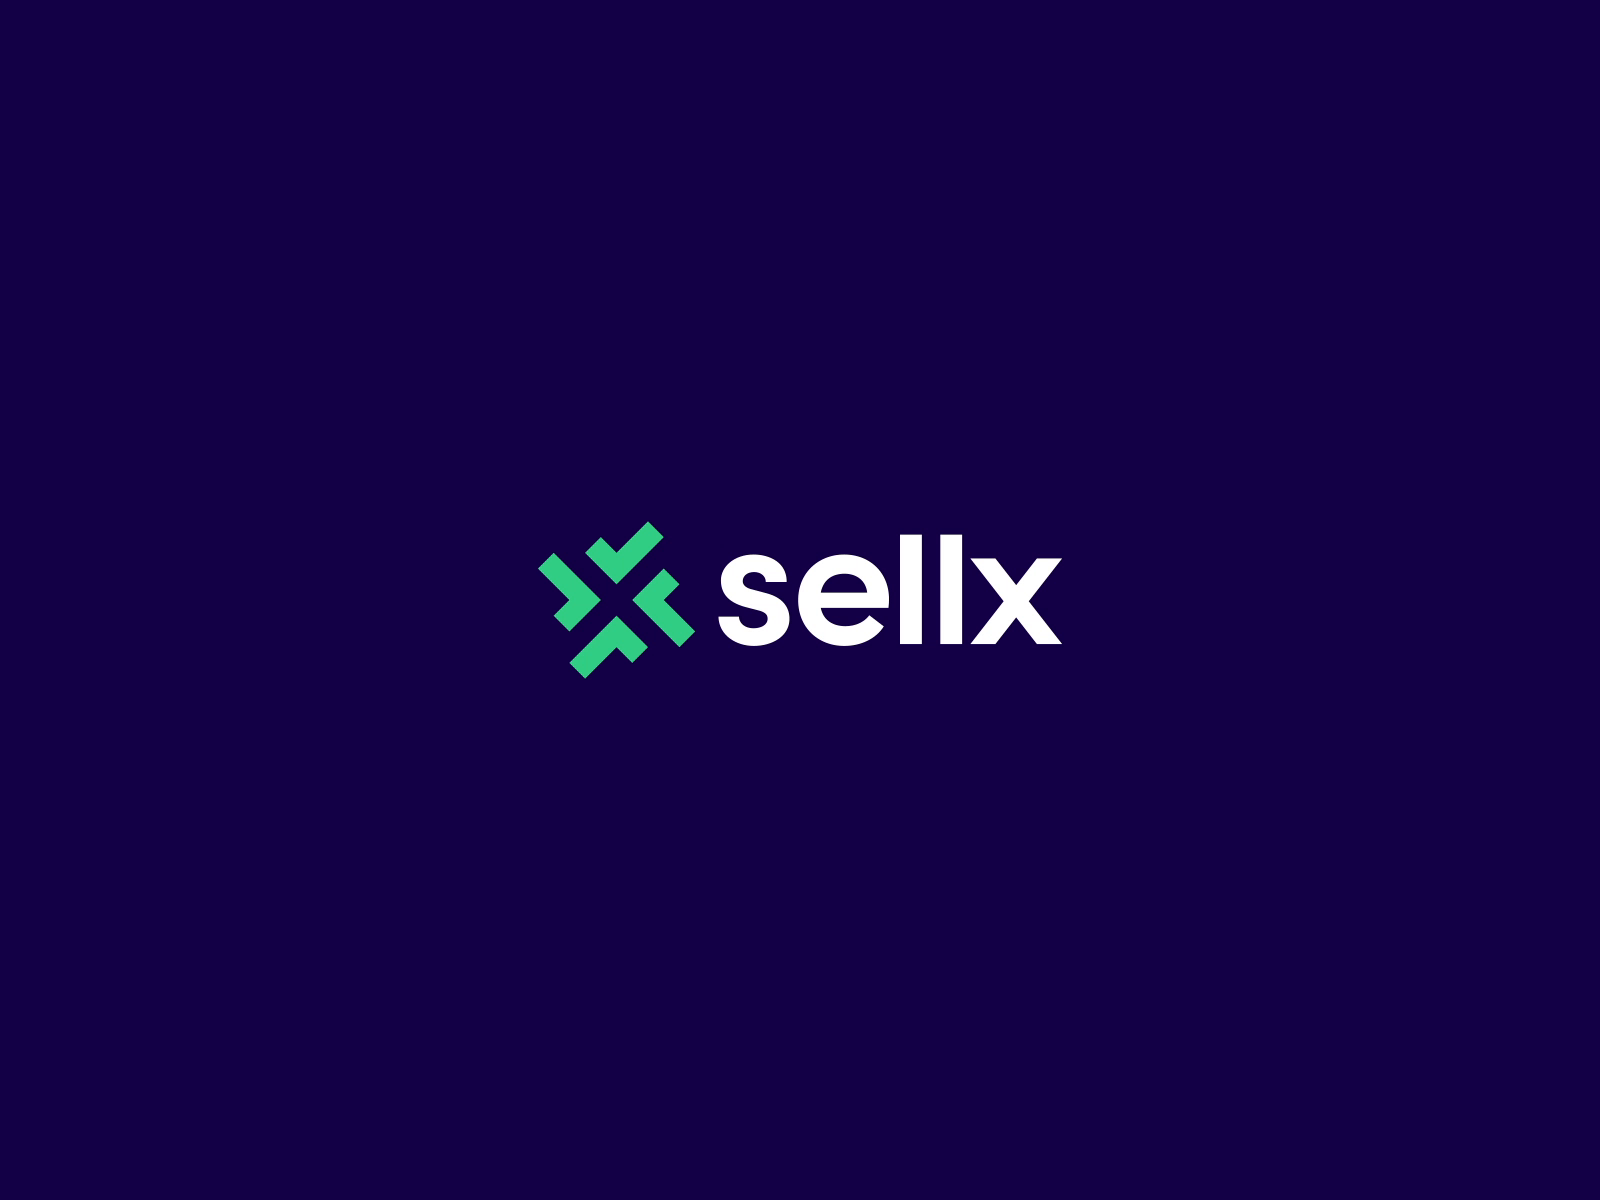 Sellx 2d intro logo animation logo reveal sales sells x